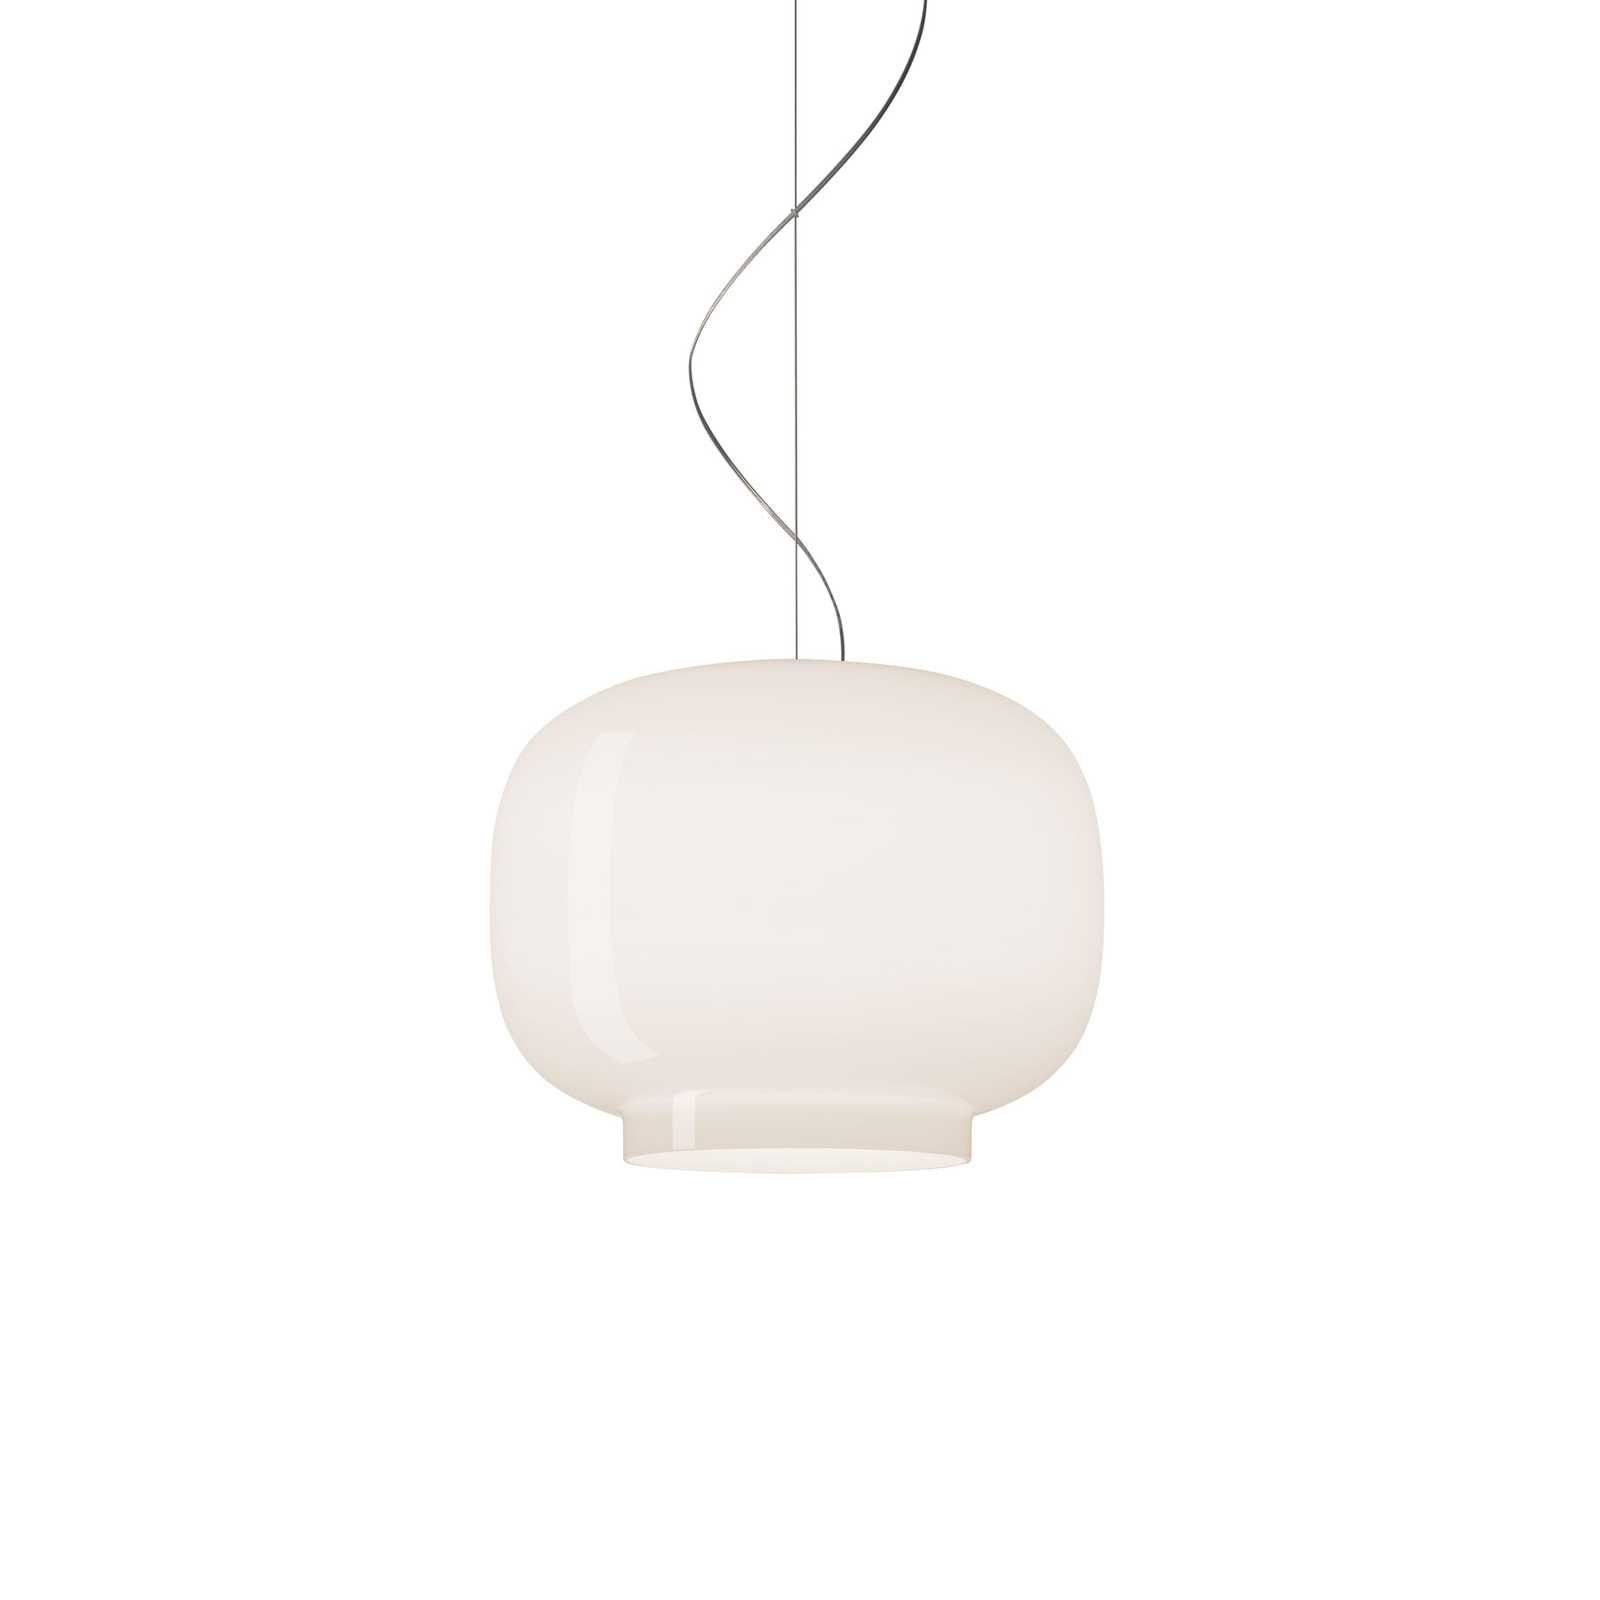 Foscarini Chouchin Bianco 1 lampada a sospensione a LED, dimmerabile